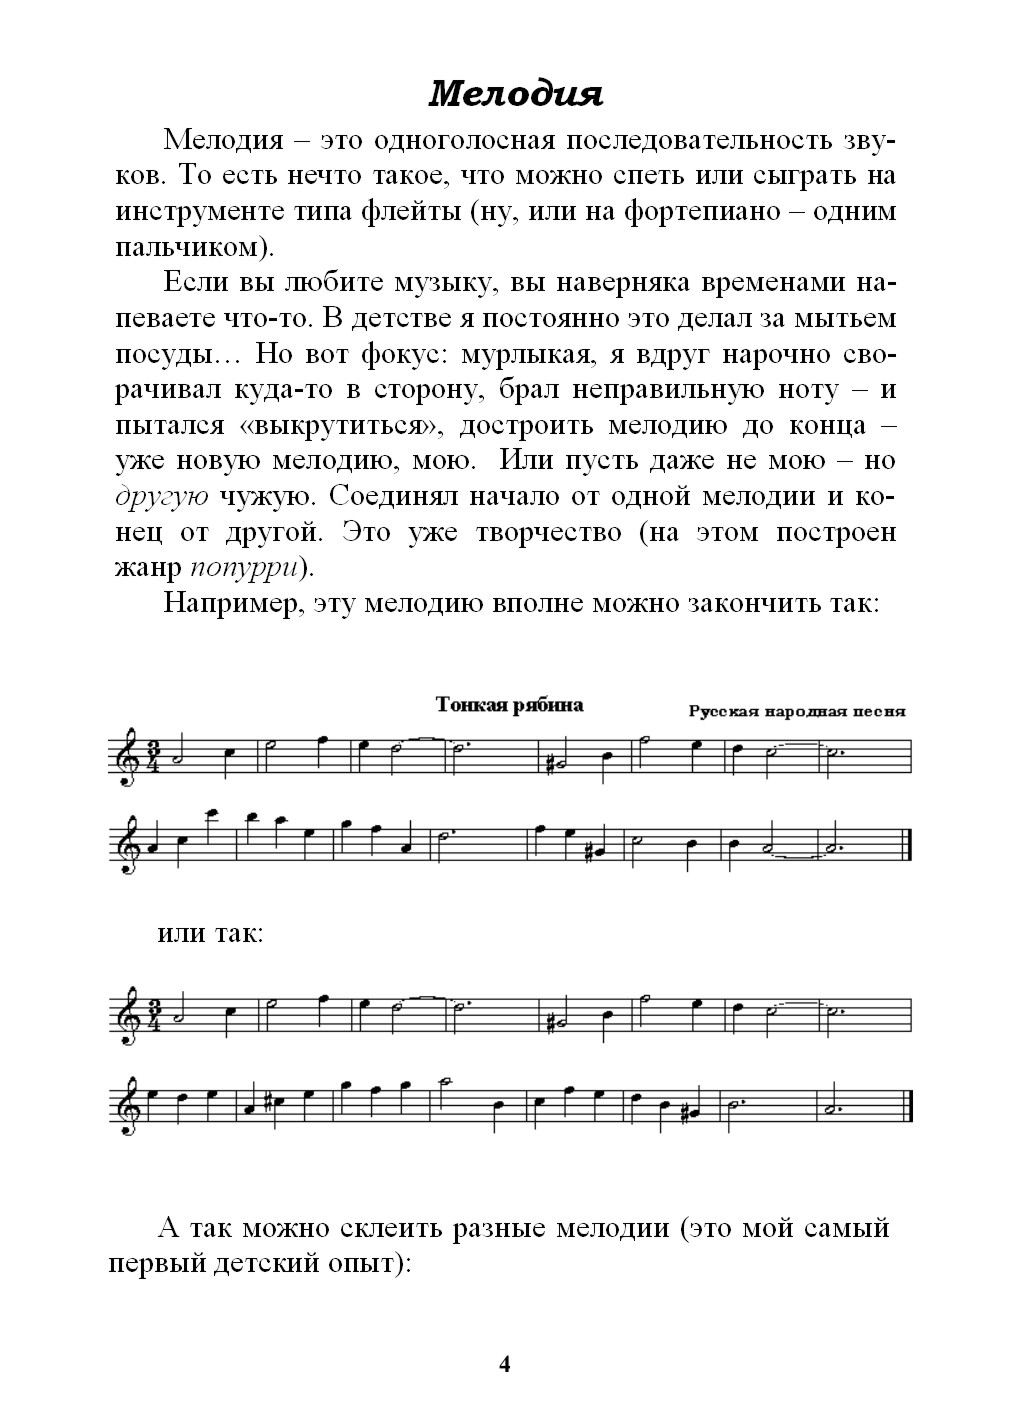 композиторский учебник А. Кофанова